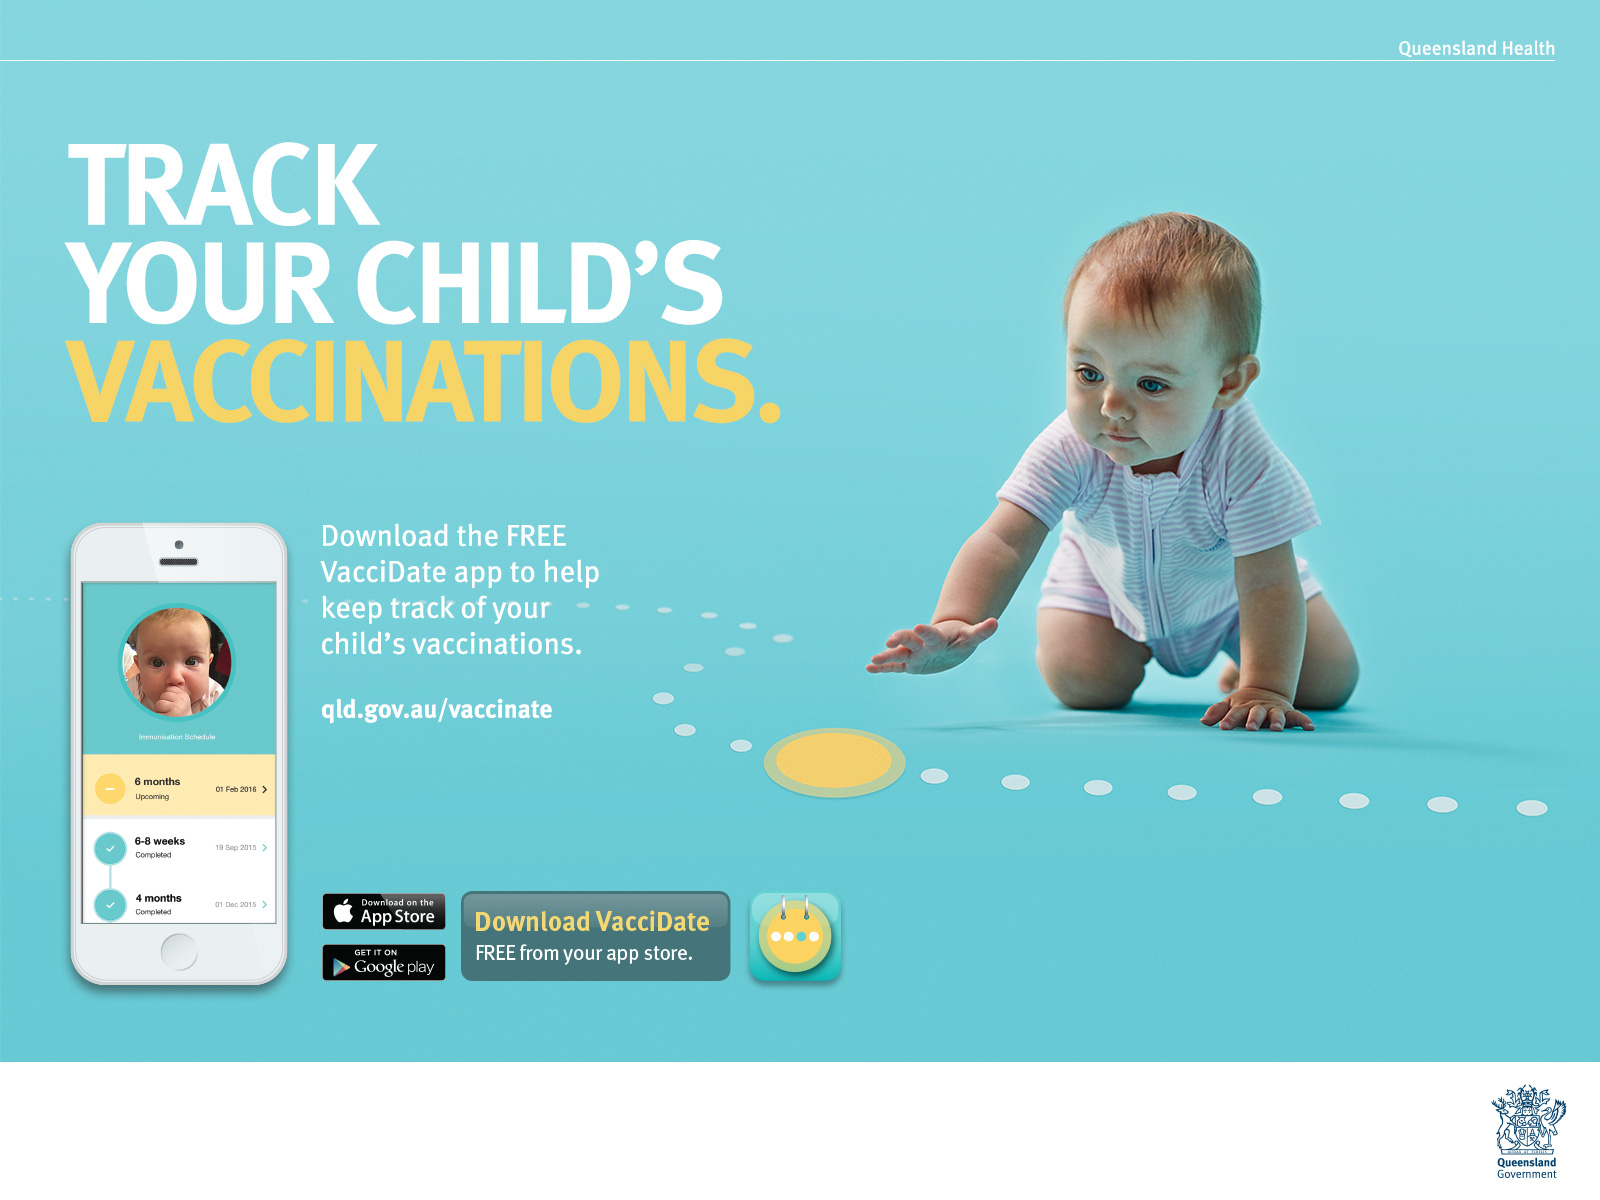 vaccination-matters-childhood-immunisation-campaign-queensland-health